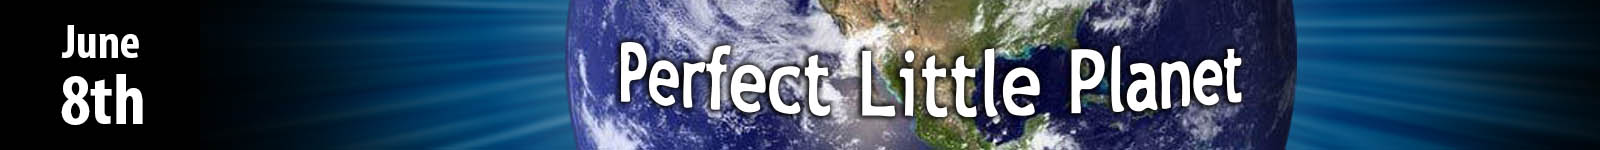 logo for planetarium show Perfect Little Planet